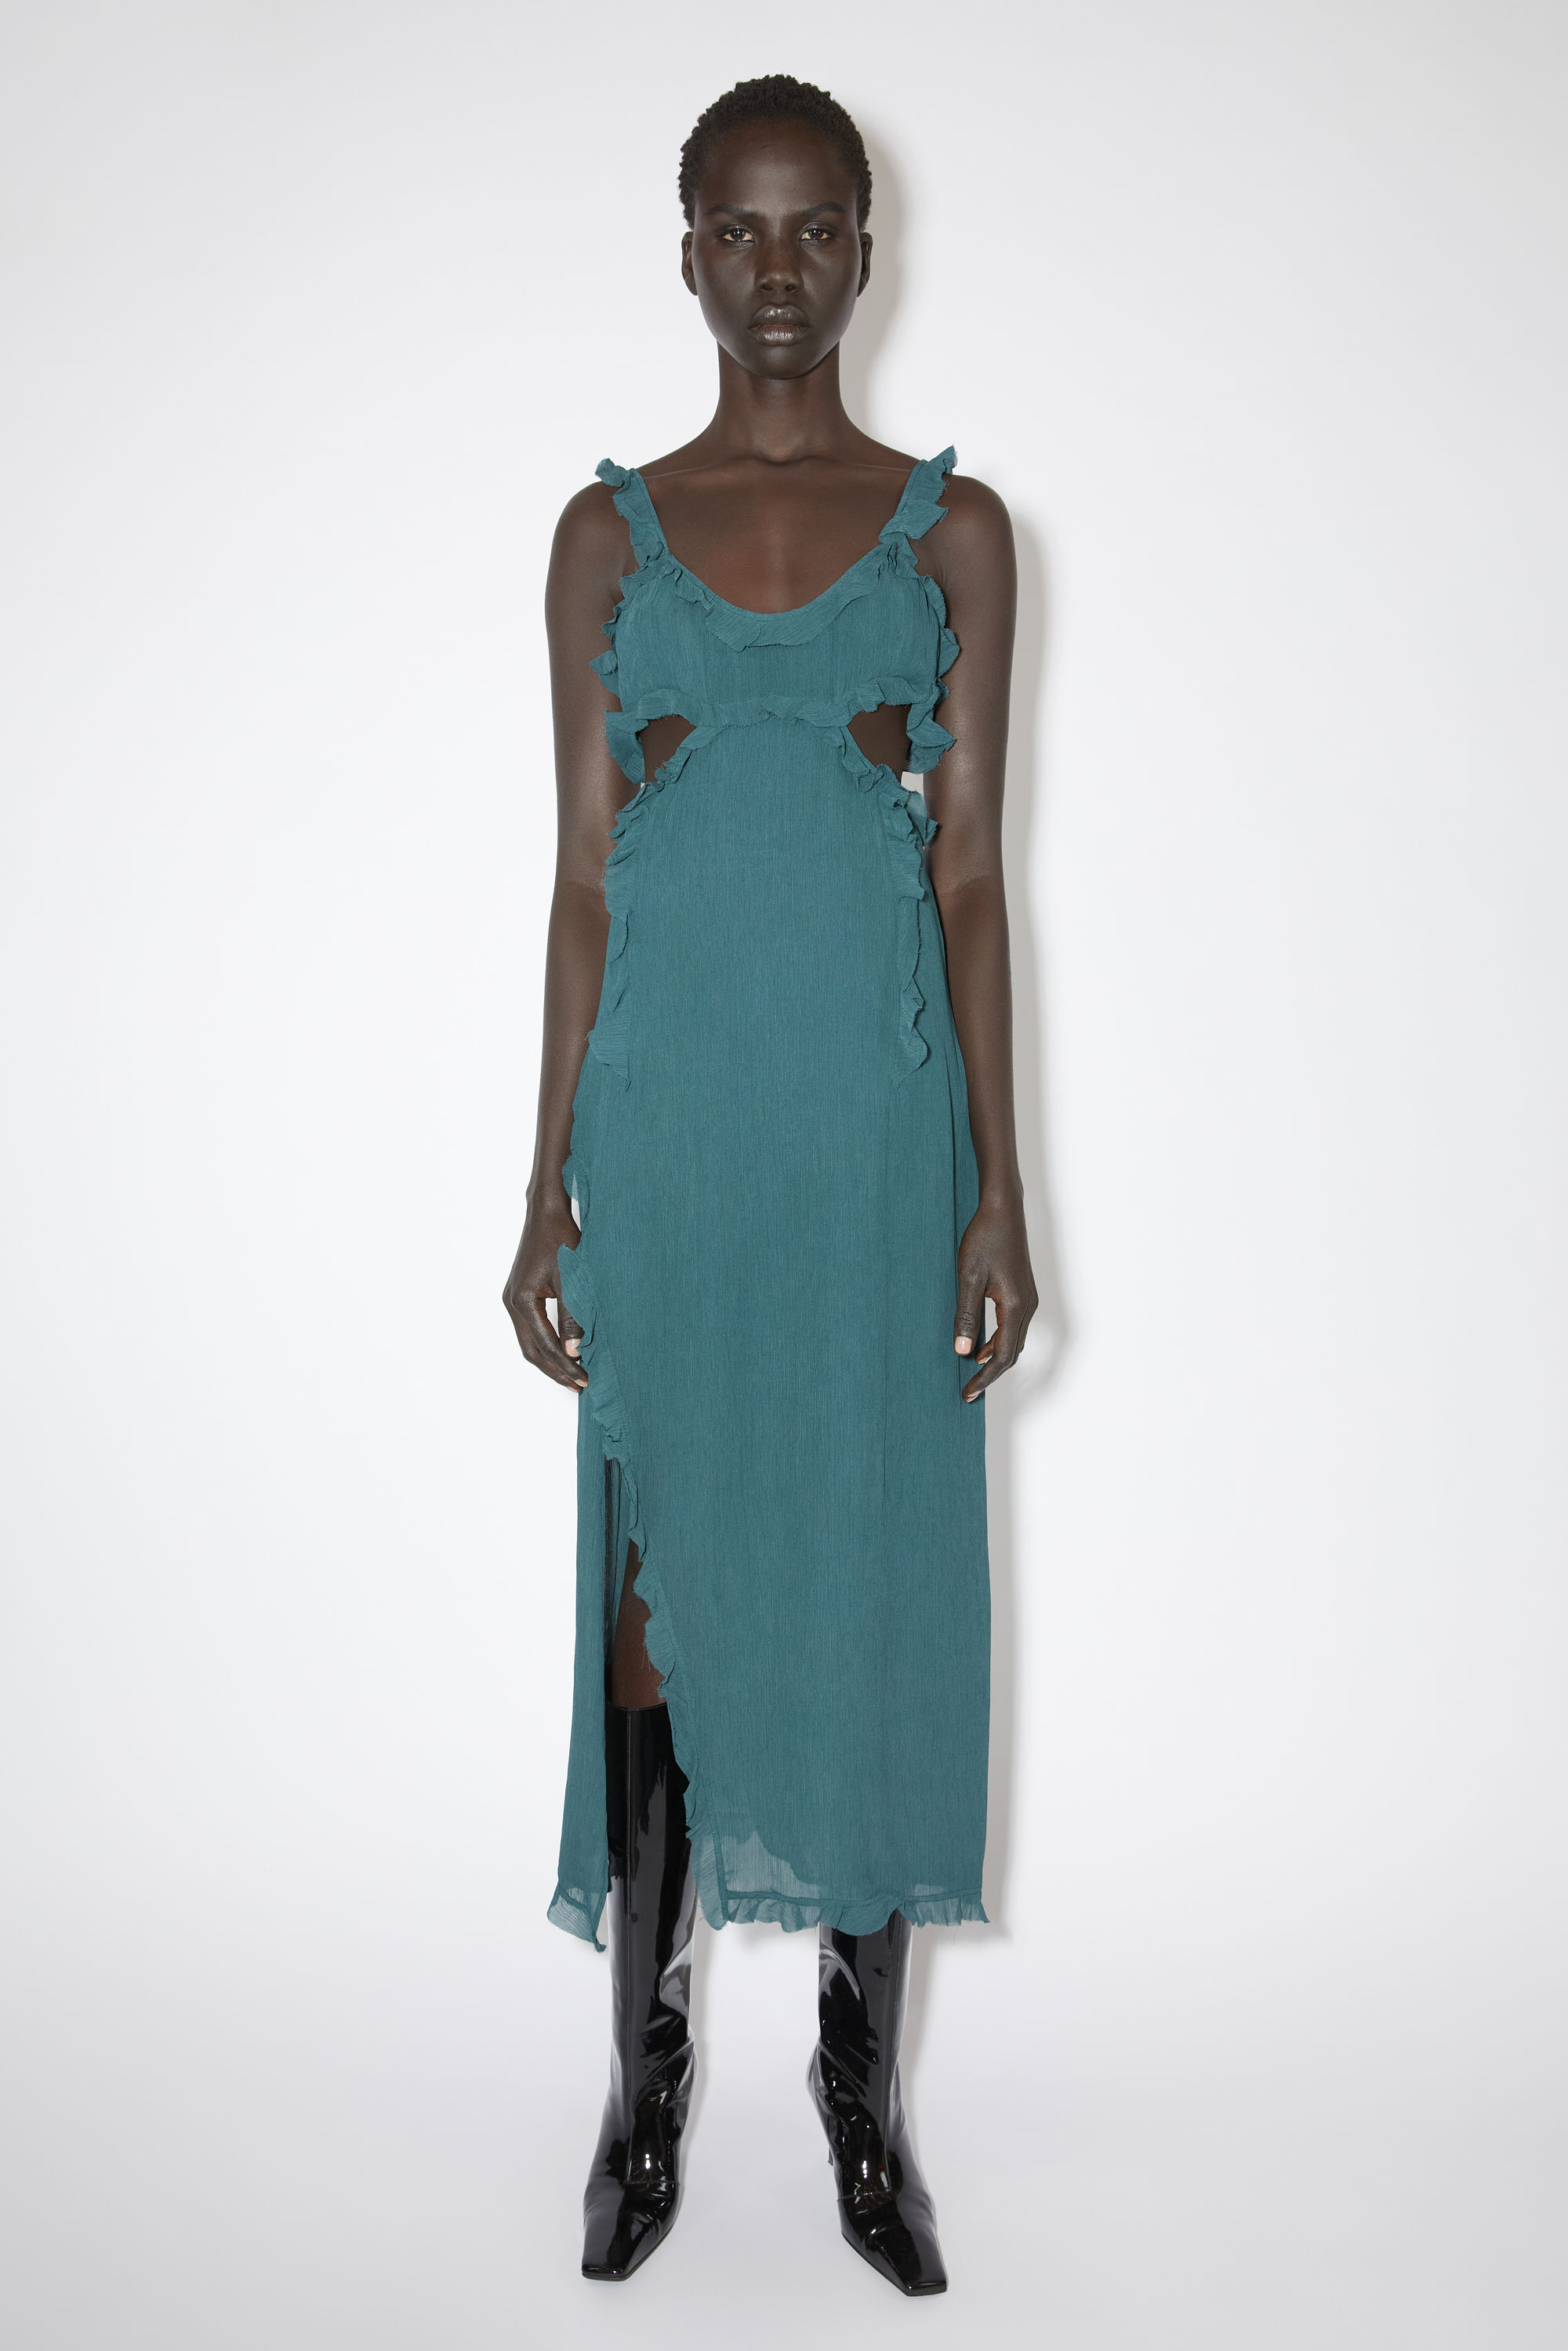 Acne Studios – Women's Dresses